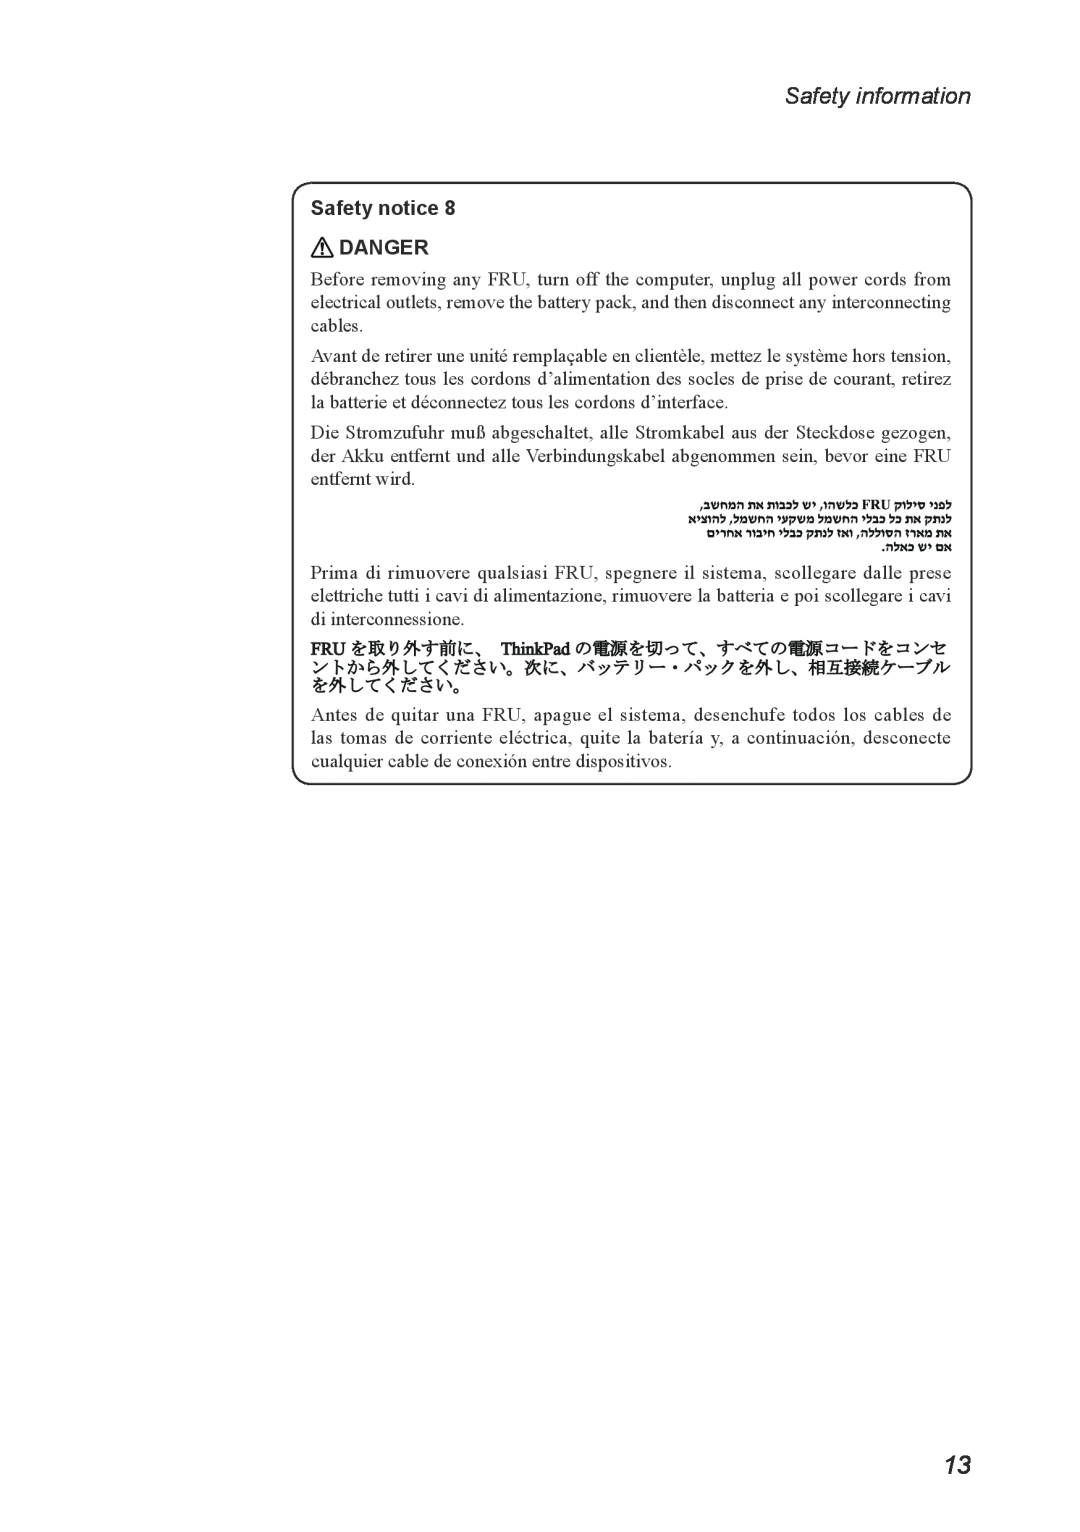 Lenovo K1, T20x2-1, 1304XF8 manual Safety information, Safety notice DANGER 